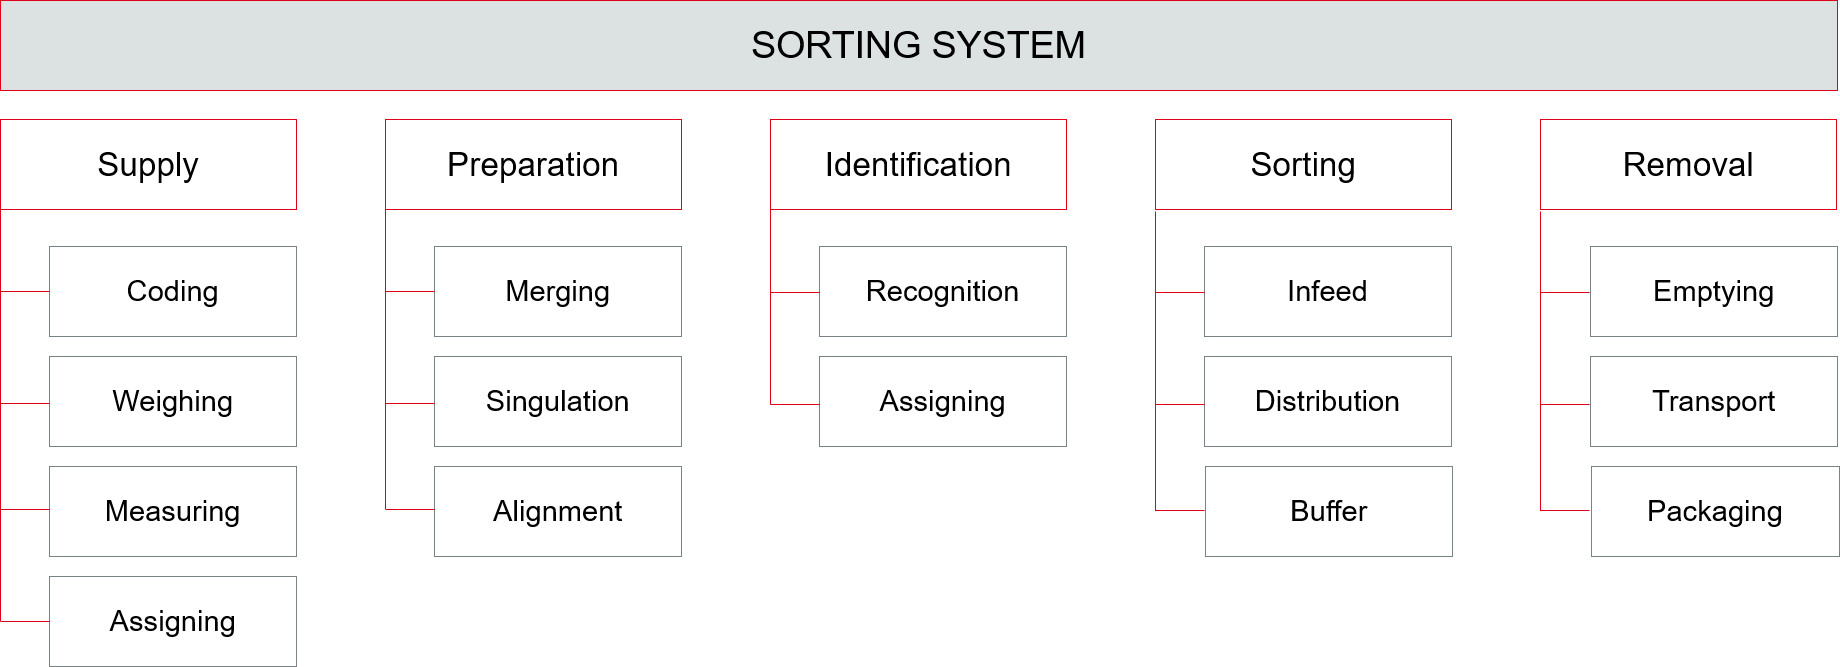 Sorting system